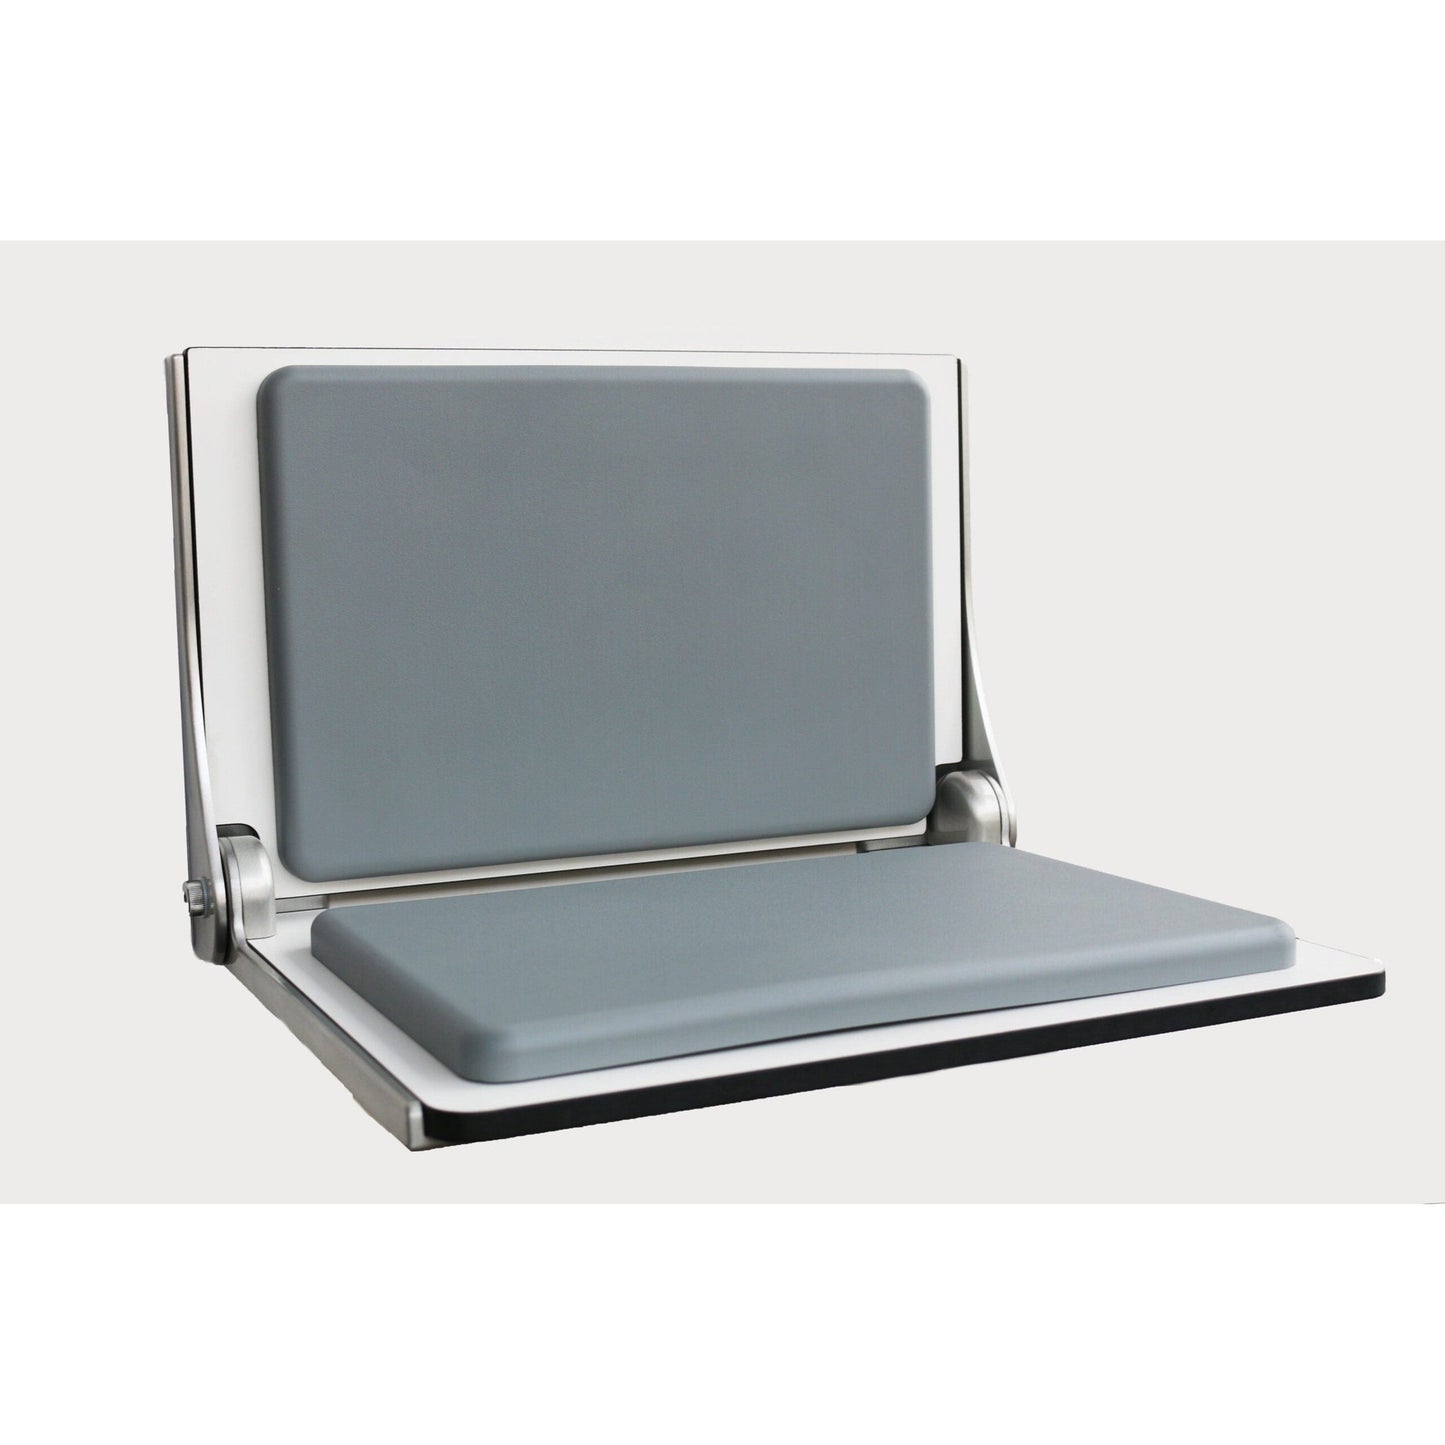 Seachrome Lifestyle & Wellness 16" W x 11" D Silver Polyurethane Closed Cell Foam Silhouette Seat Pad